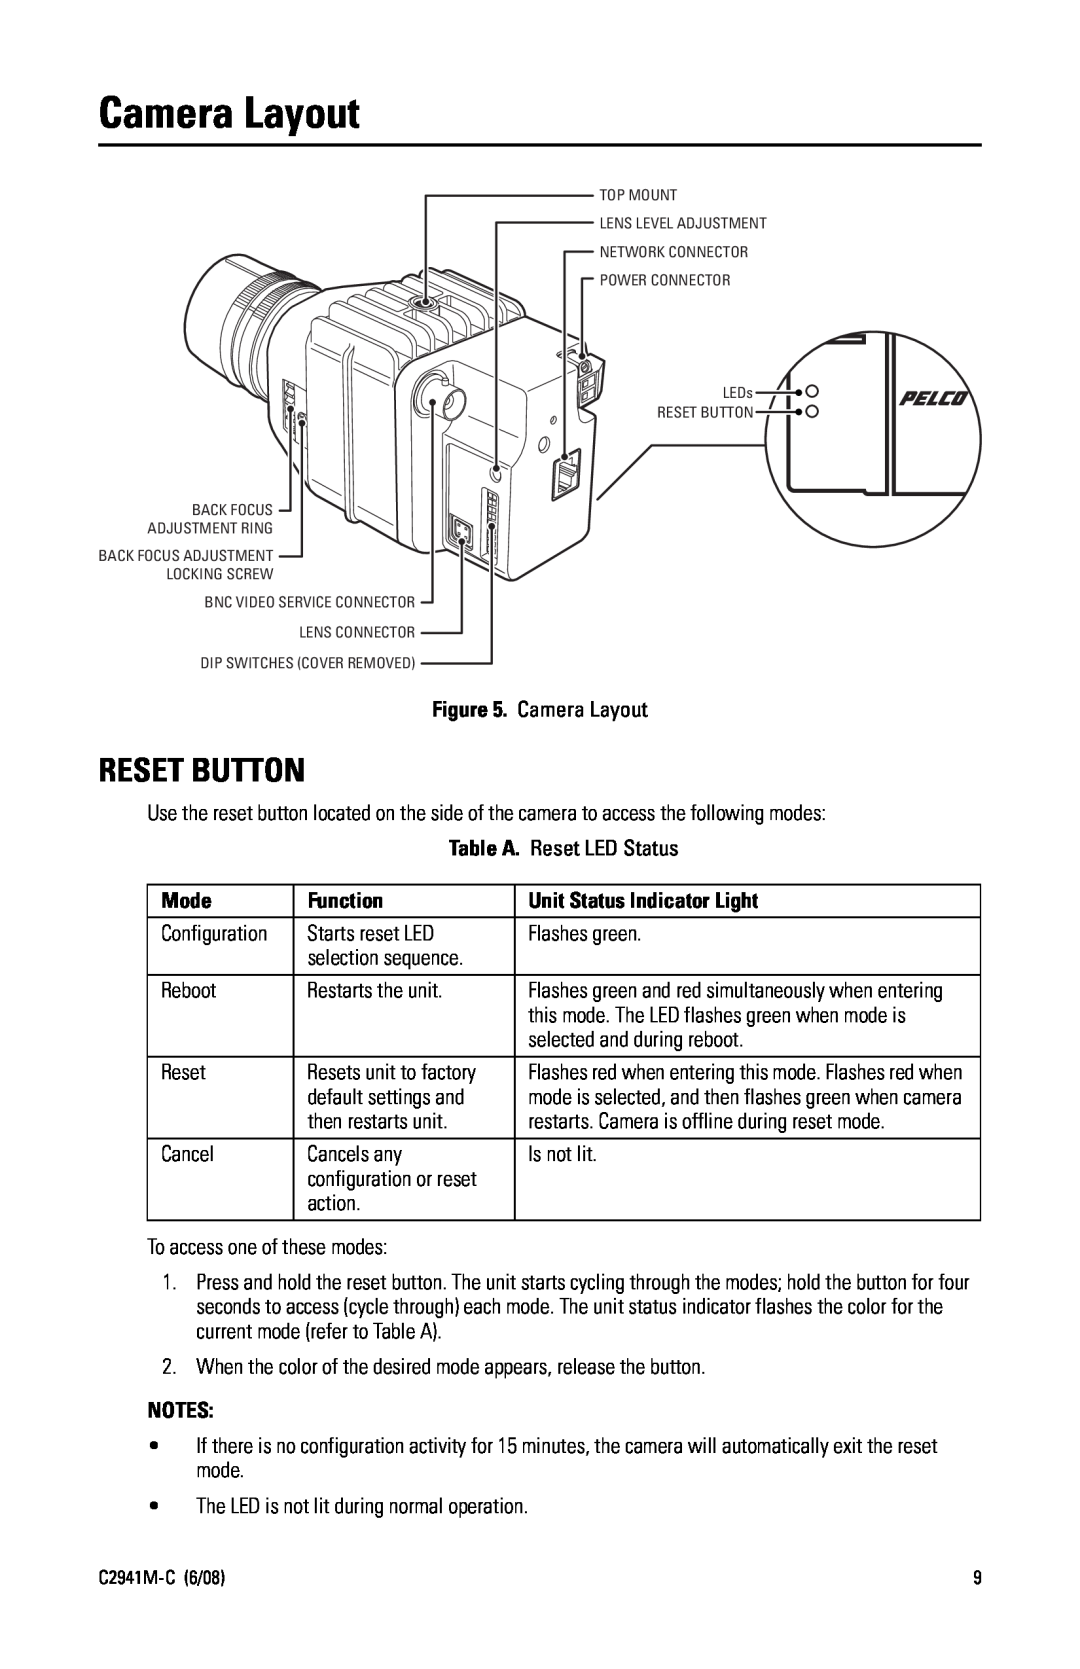 Pelco IP3701H-2 manual Camera Layout, Reset Button, Mode, Function, Unit Status Indicator Light 